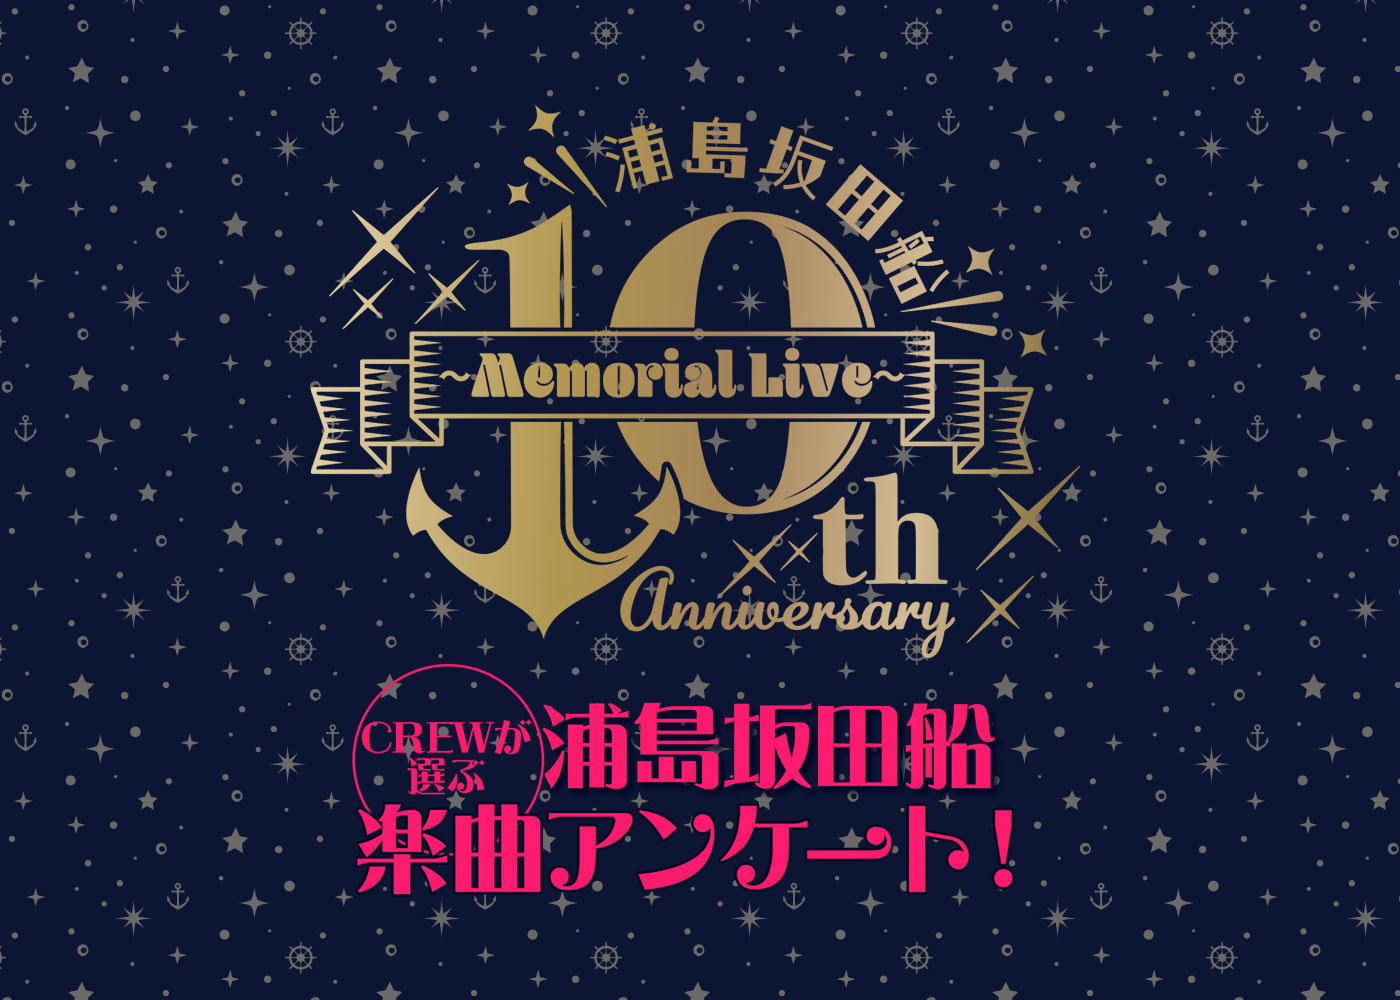 10th -「浦島坂田船 Live」 Memorial Anniversary